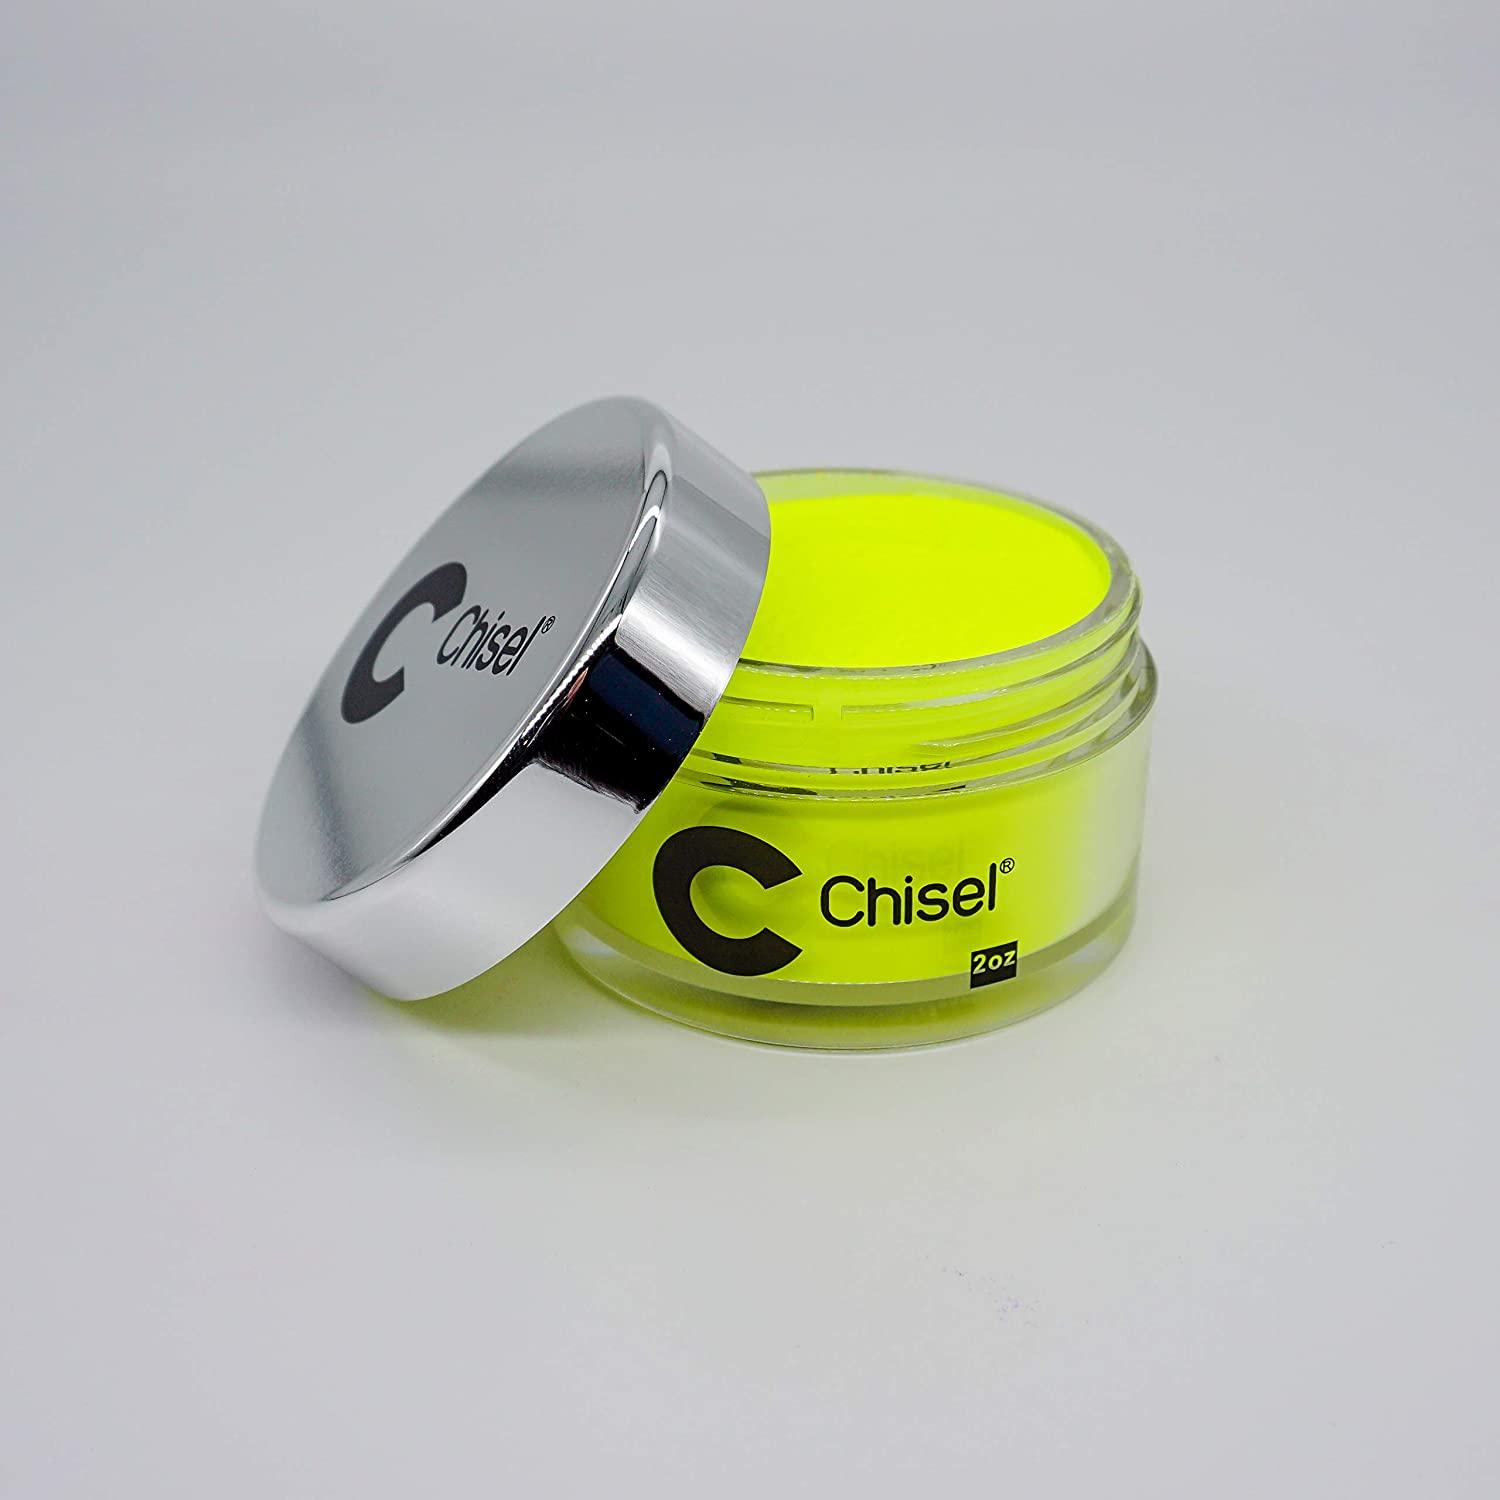 Chisel Nail Art Dipping Powder 2 Oz - Neon #1